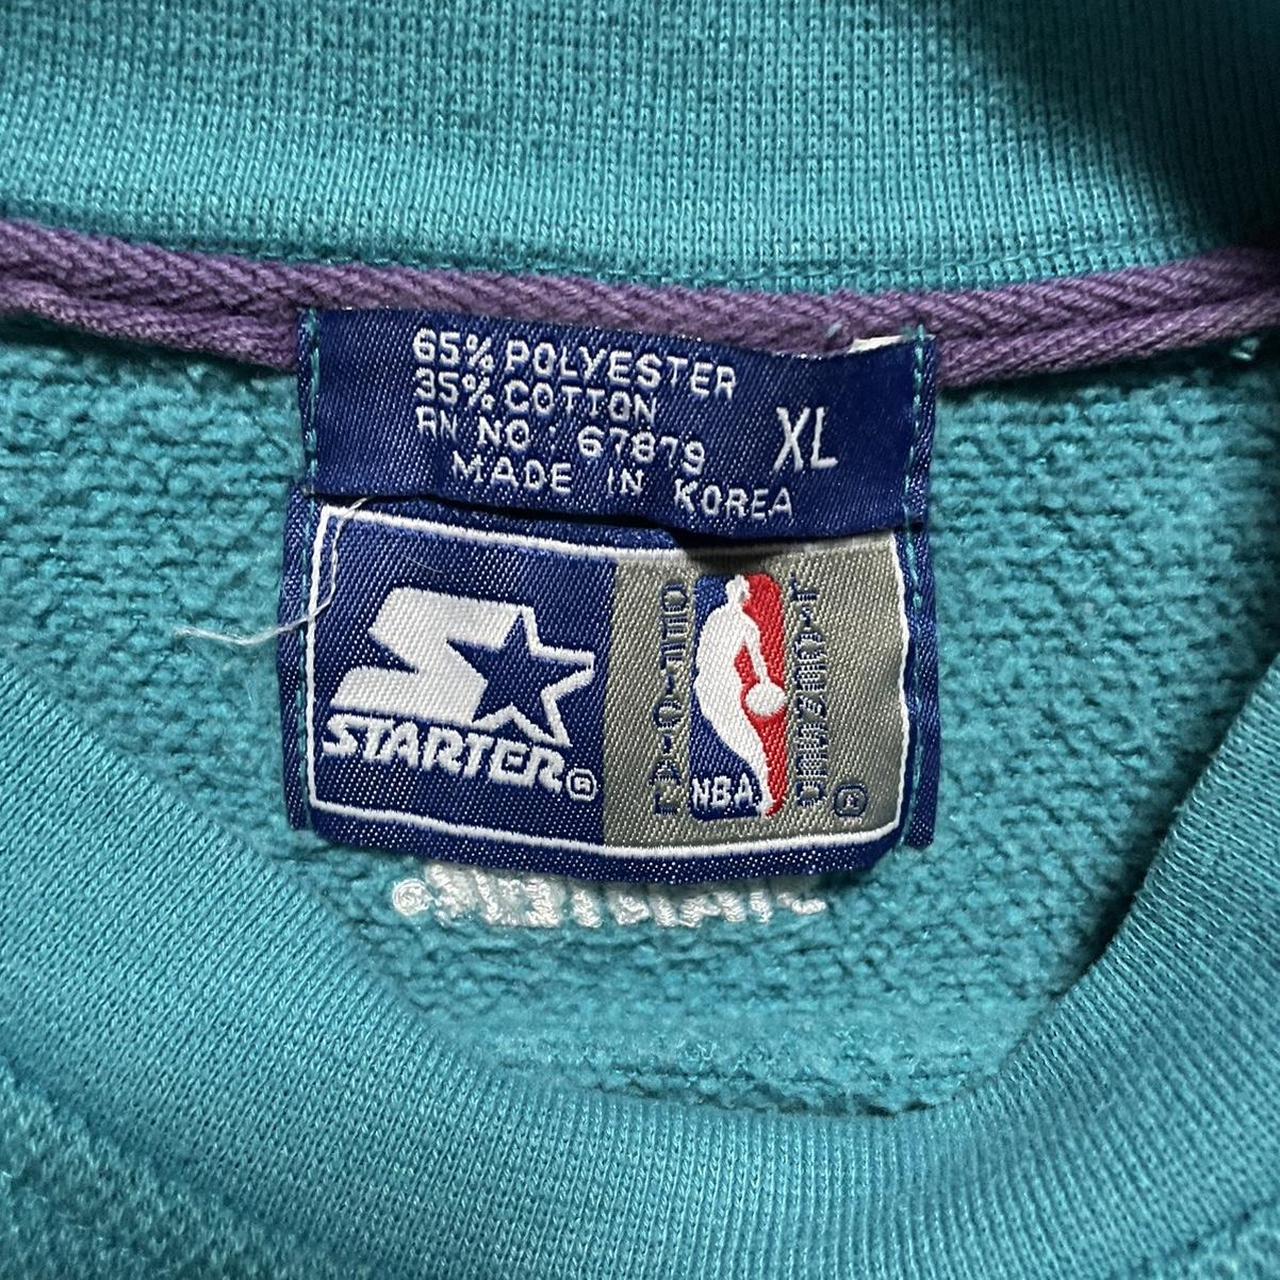 Vintage 90s NBA Charlotte Hornets Starter Sweatshirt - Depop